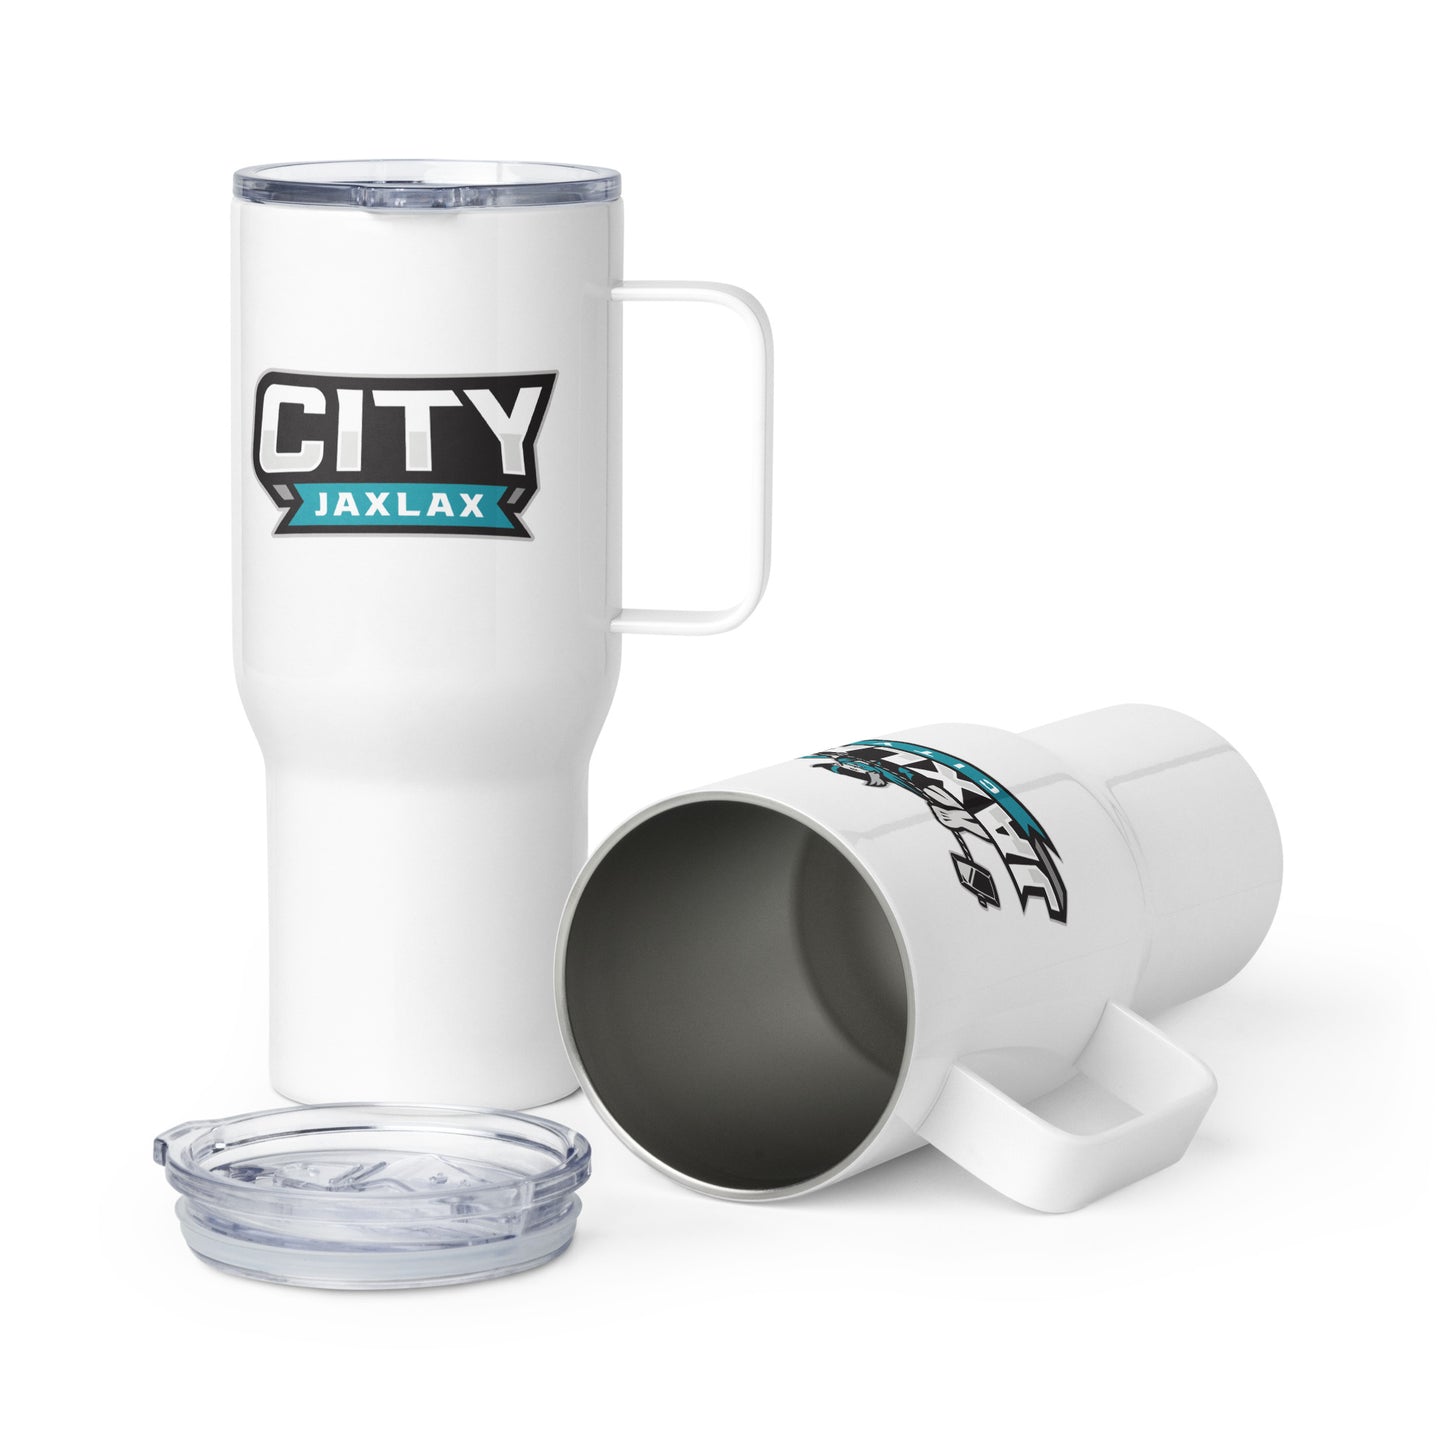 Jax Lax City - Travel mug with a handle